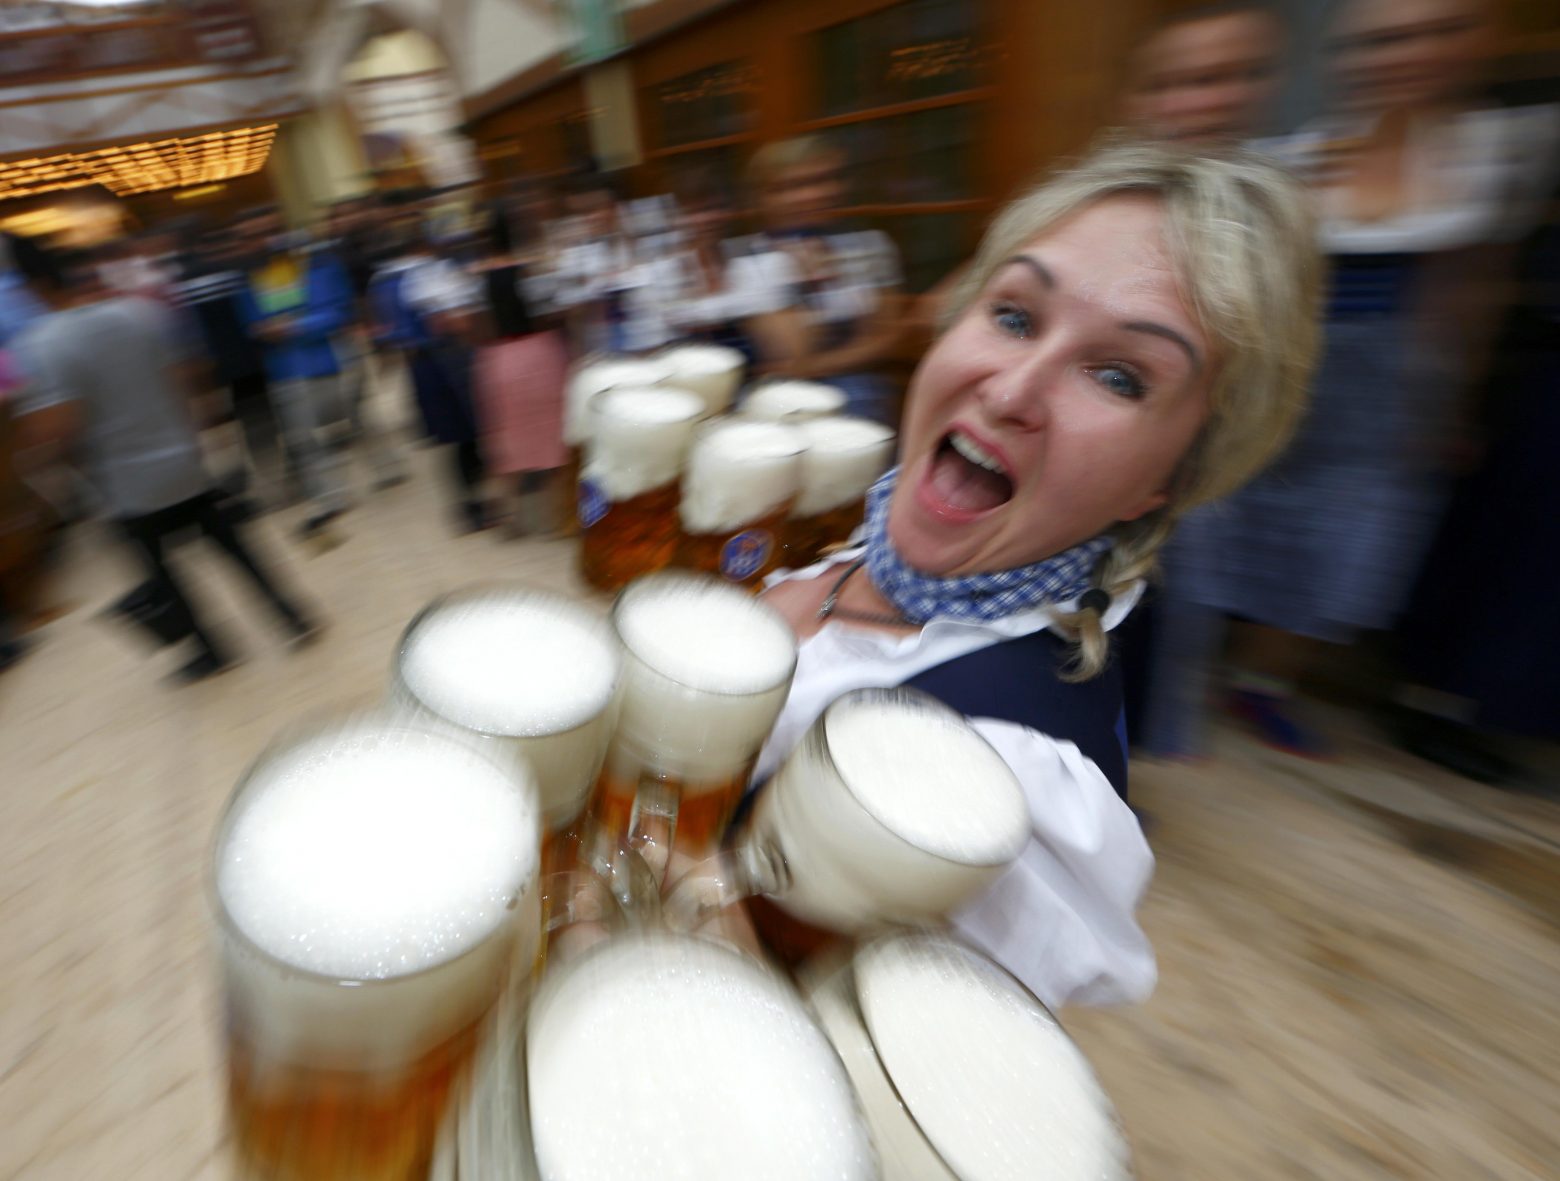 Oktoberfest: Ακυρώθηκε και το φετινό φεστιβάλ λόγω της πανδημίας του κοροναϊού